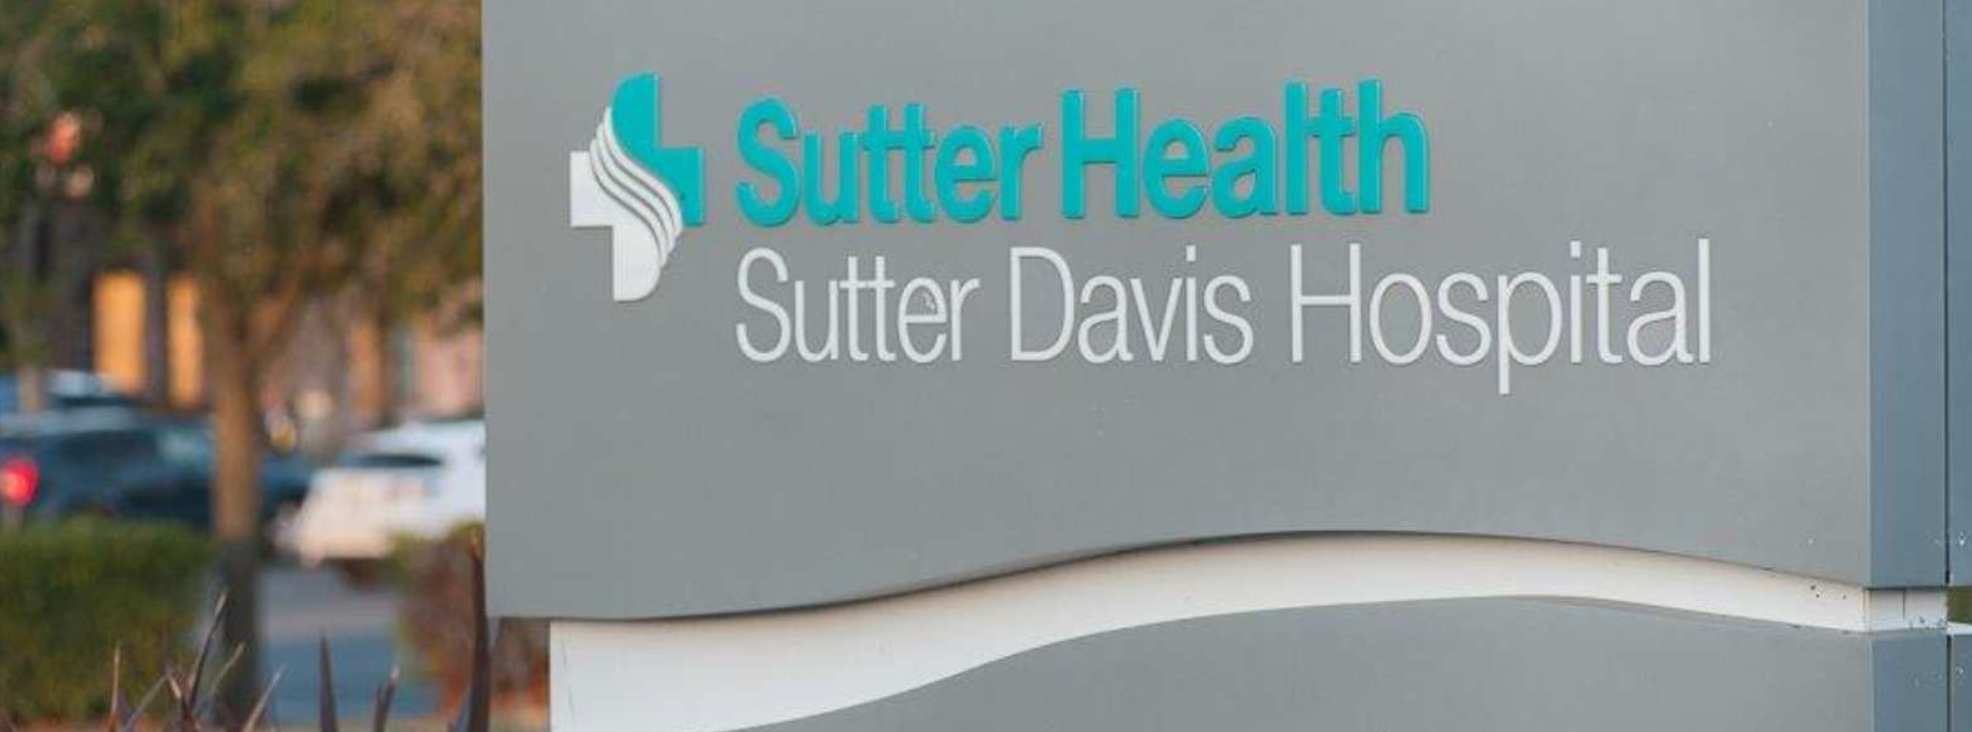 Photo of exterior Sutter Health/Sutter Davis Hospital sign